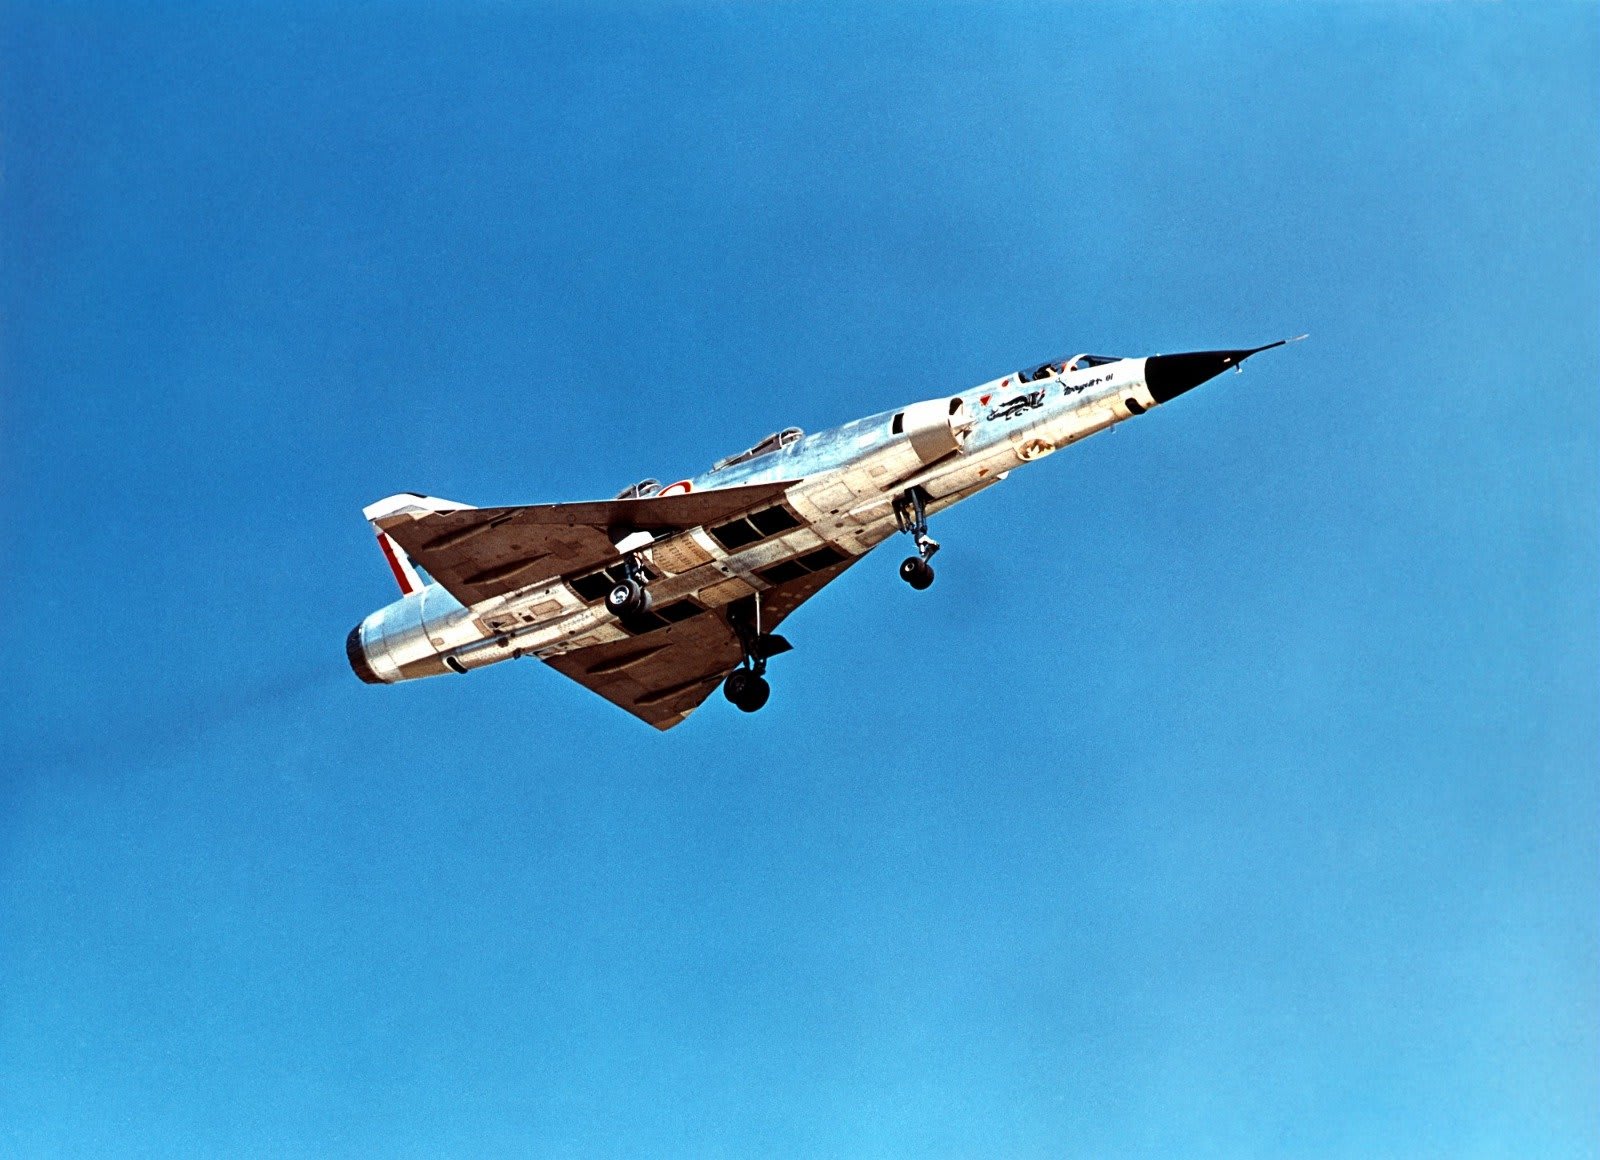 Mirage III V: origins, characteristics and performance data